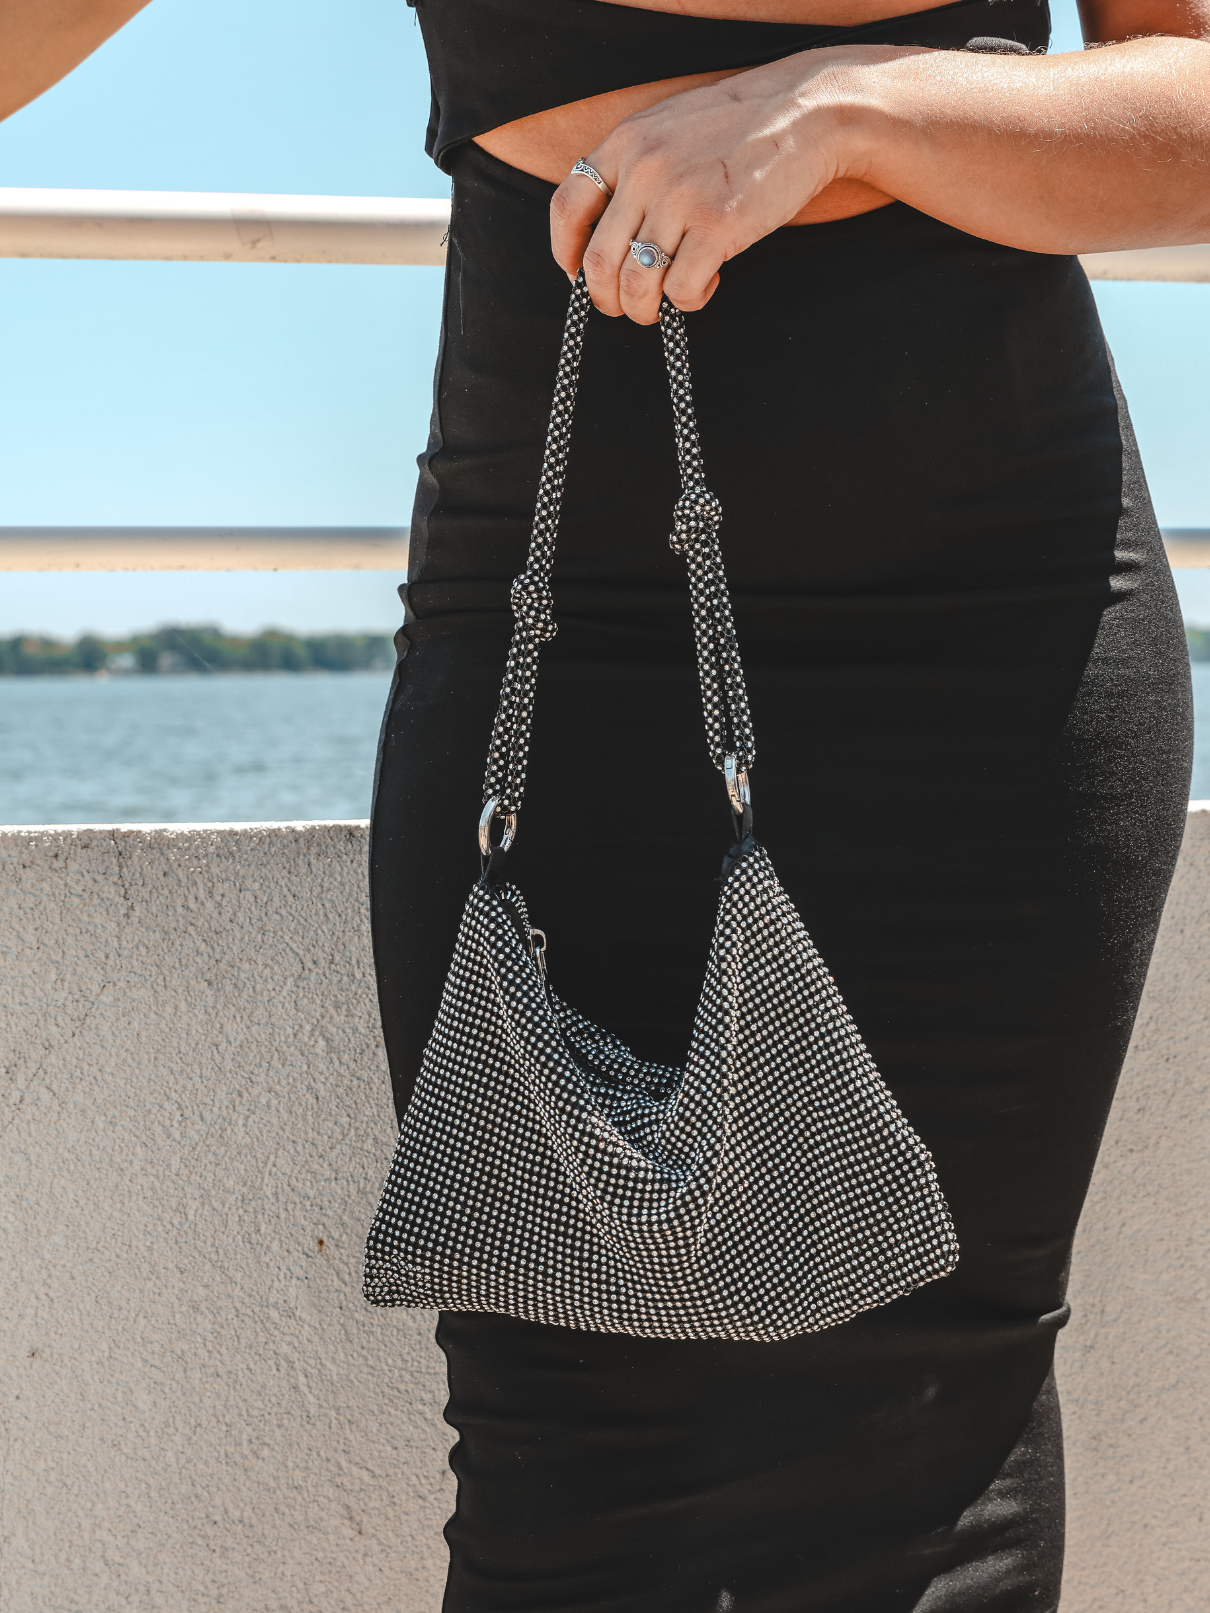 Soft Shiny Black Handbag - Rental